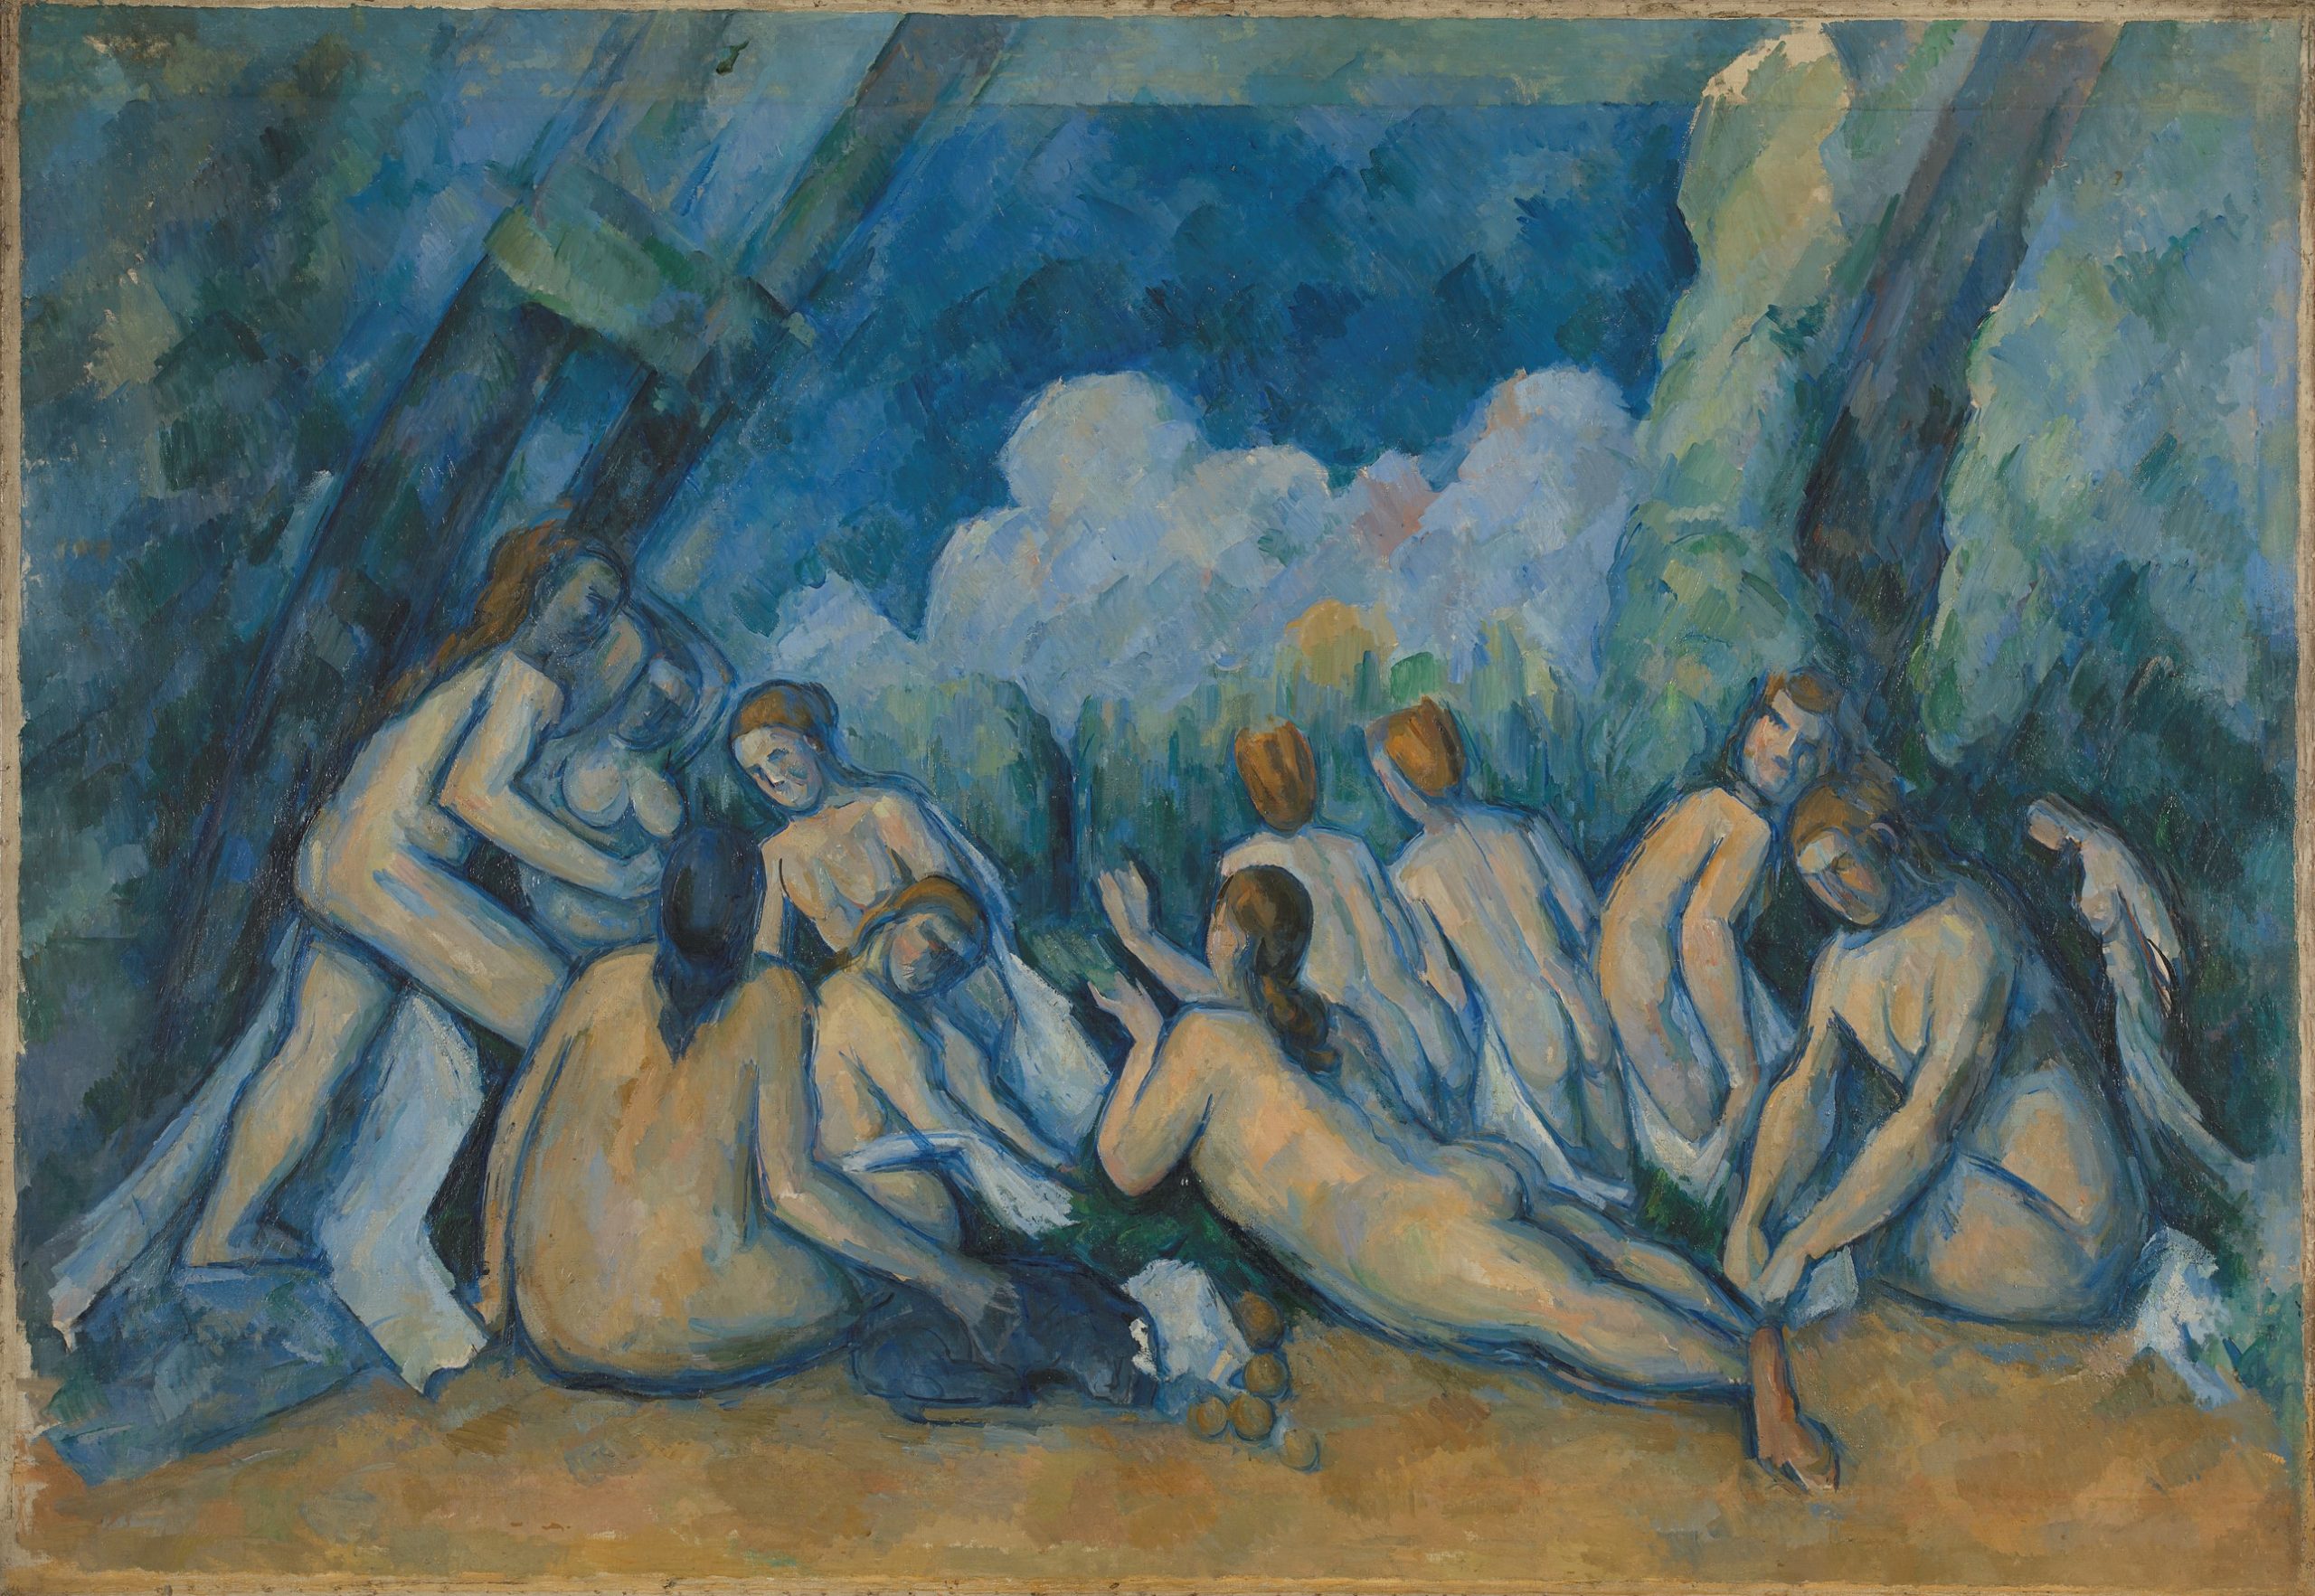 Paul Cézanne, Bathers (Les Grandes Baigneuses), about 1894 – 1905, Oil on canvas, 127.2 × 196.1 cm, © National Gallery, London